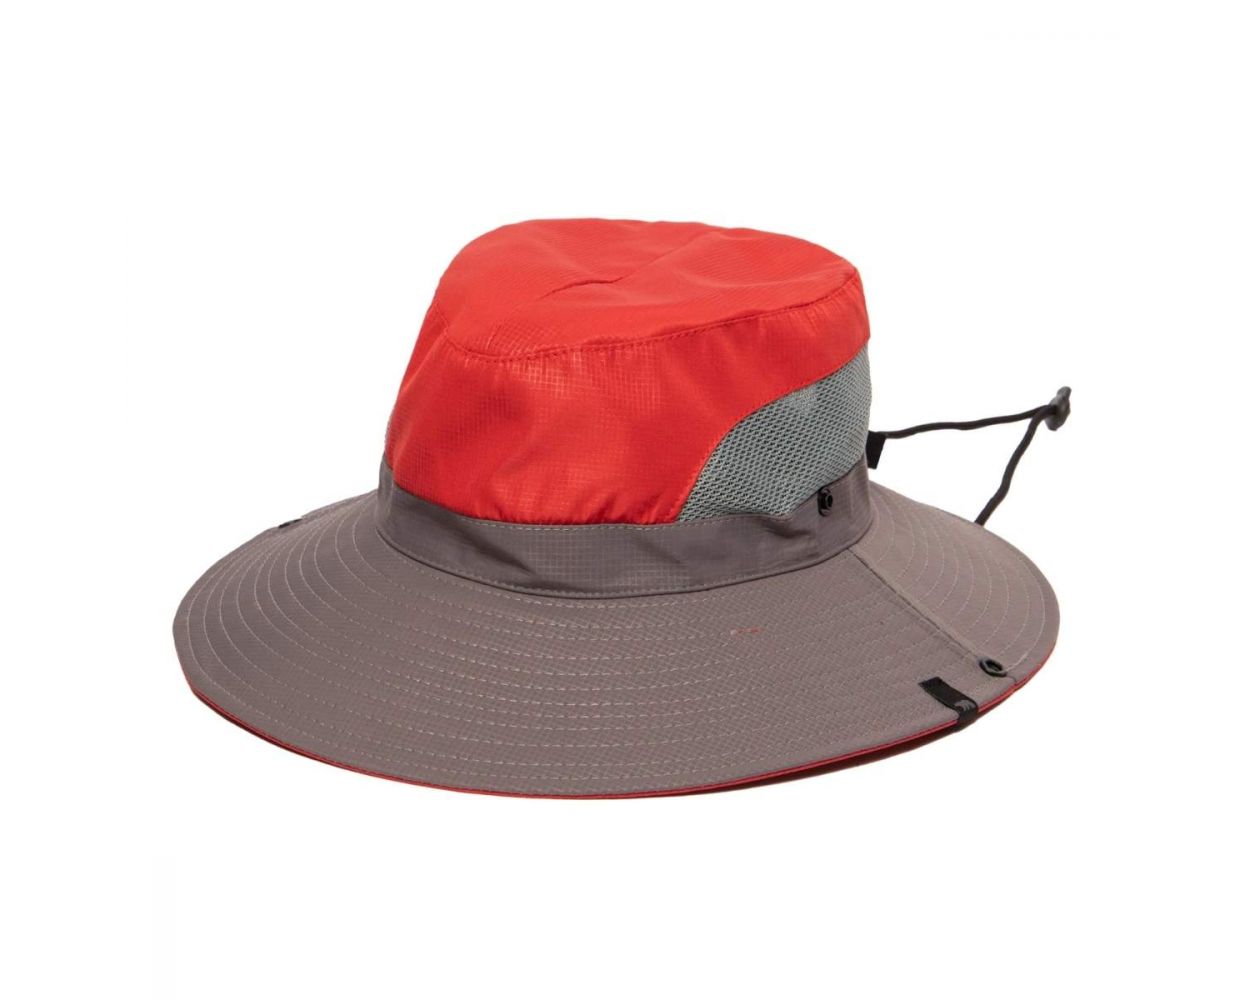 Backspin Men's Floatable Wide Brim Sun Hat